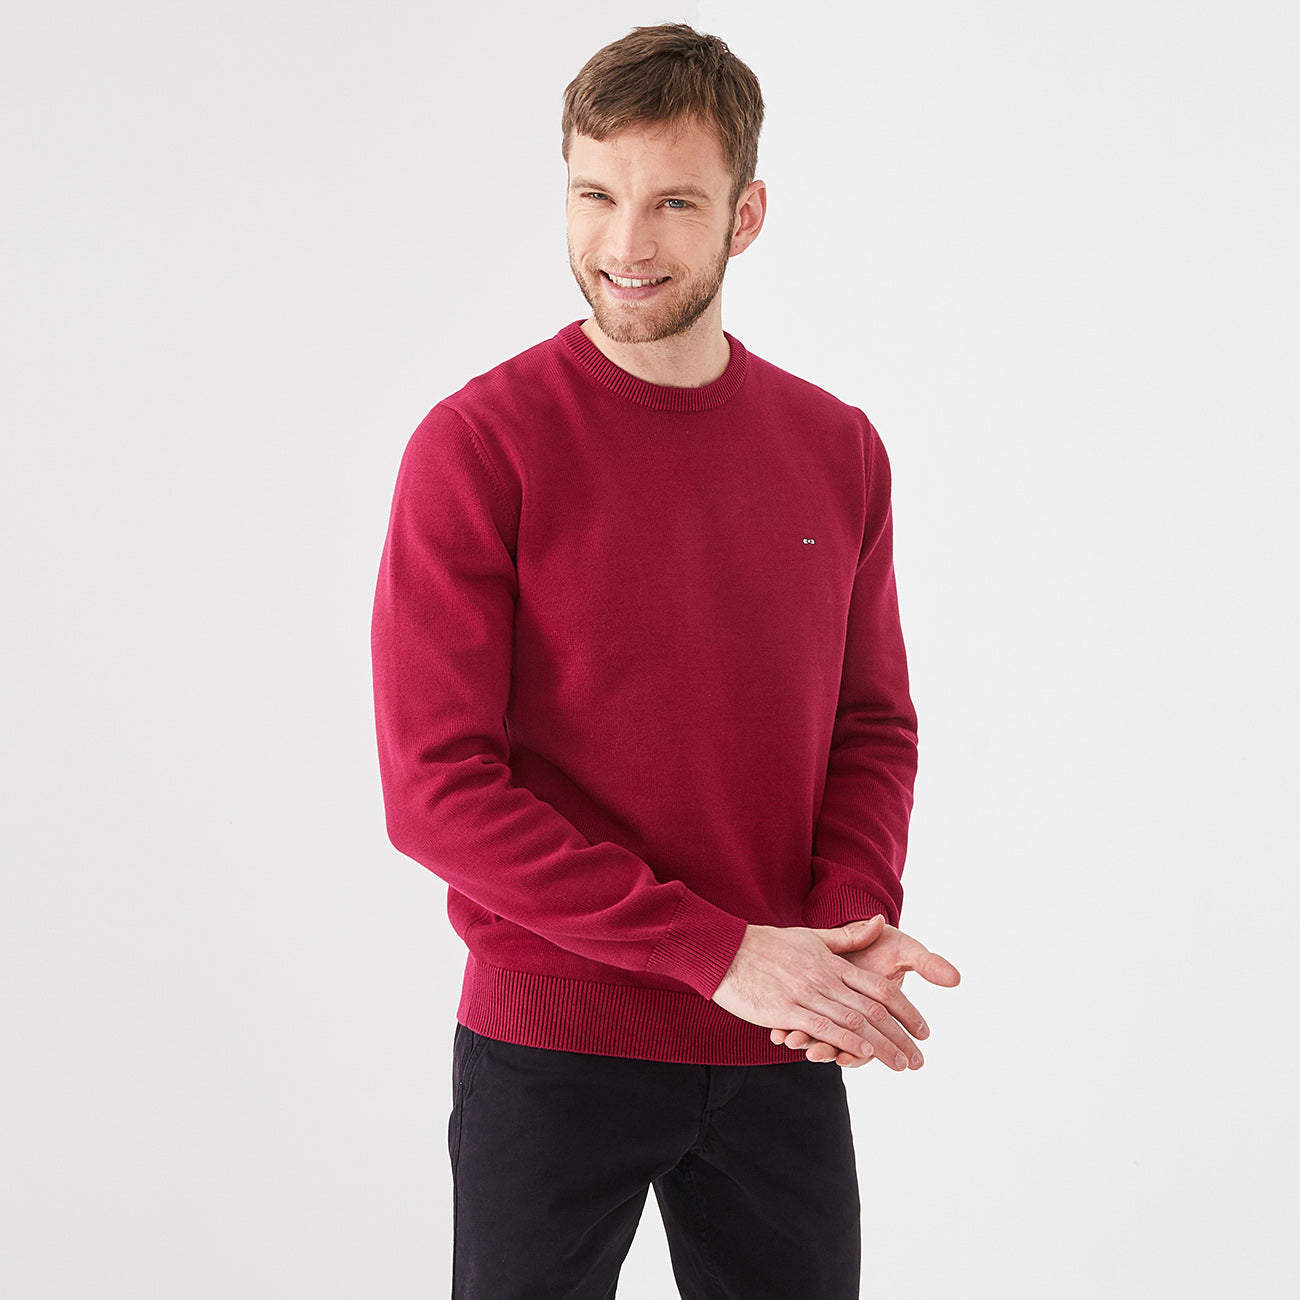 Eden Park Knitwear in regular classic fit.    Chosen in a Red colour - H21MAIPU0025